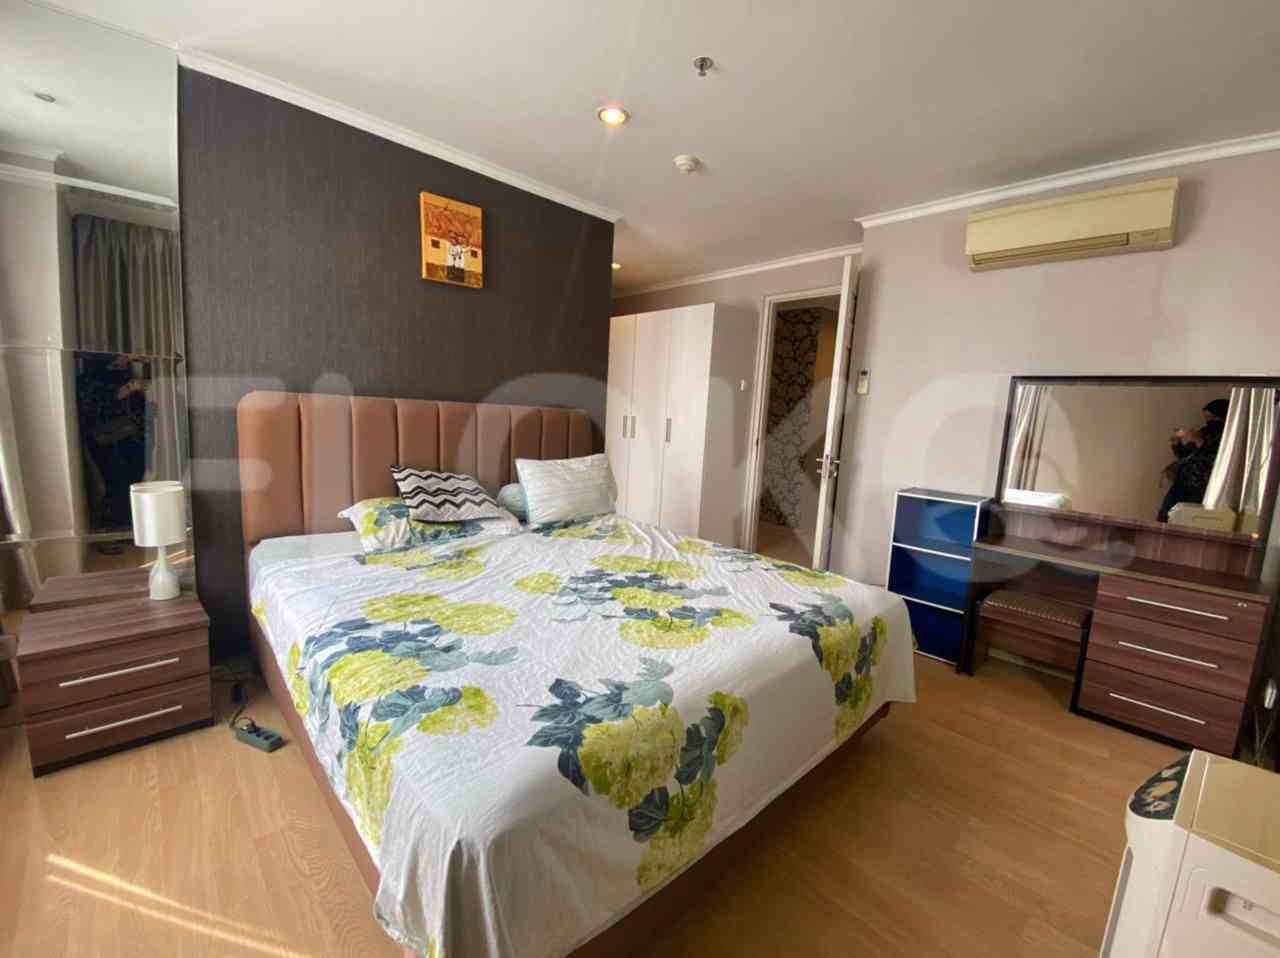 3 Bedroom on 26th Floor for Rent in FX Residence - fsu859 1